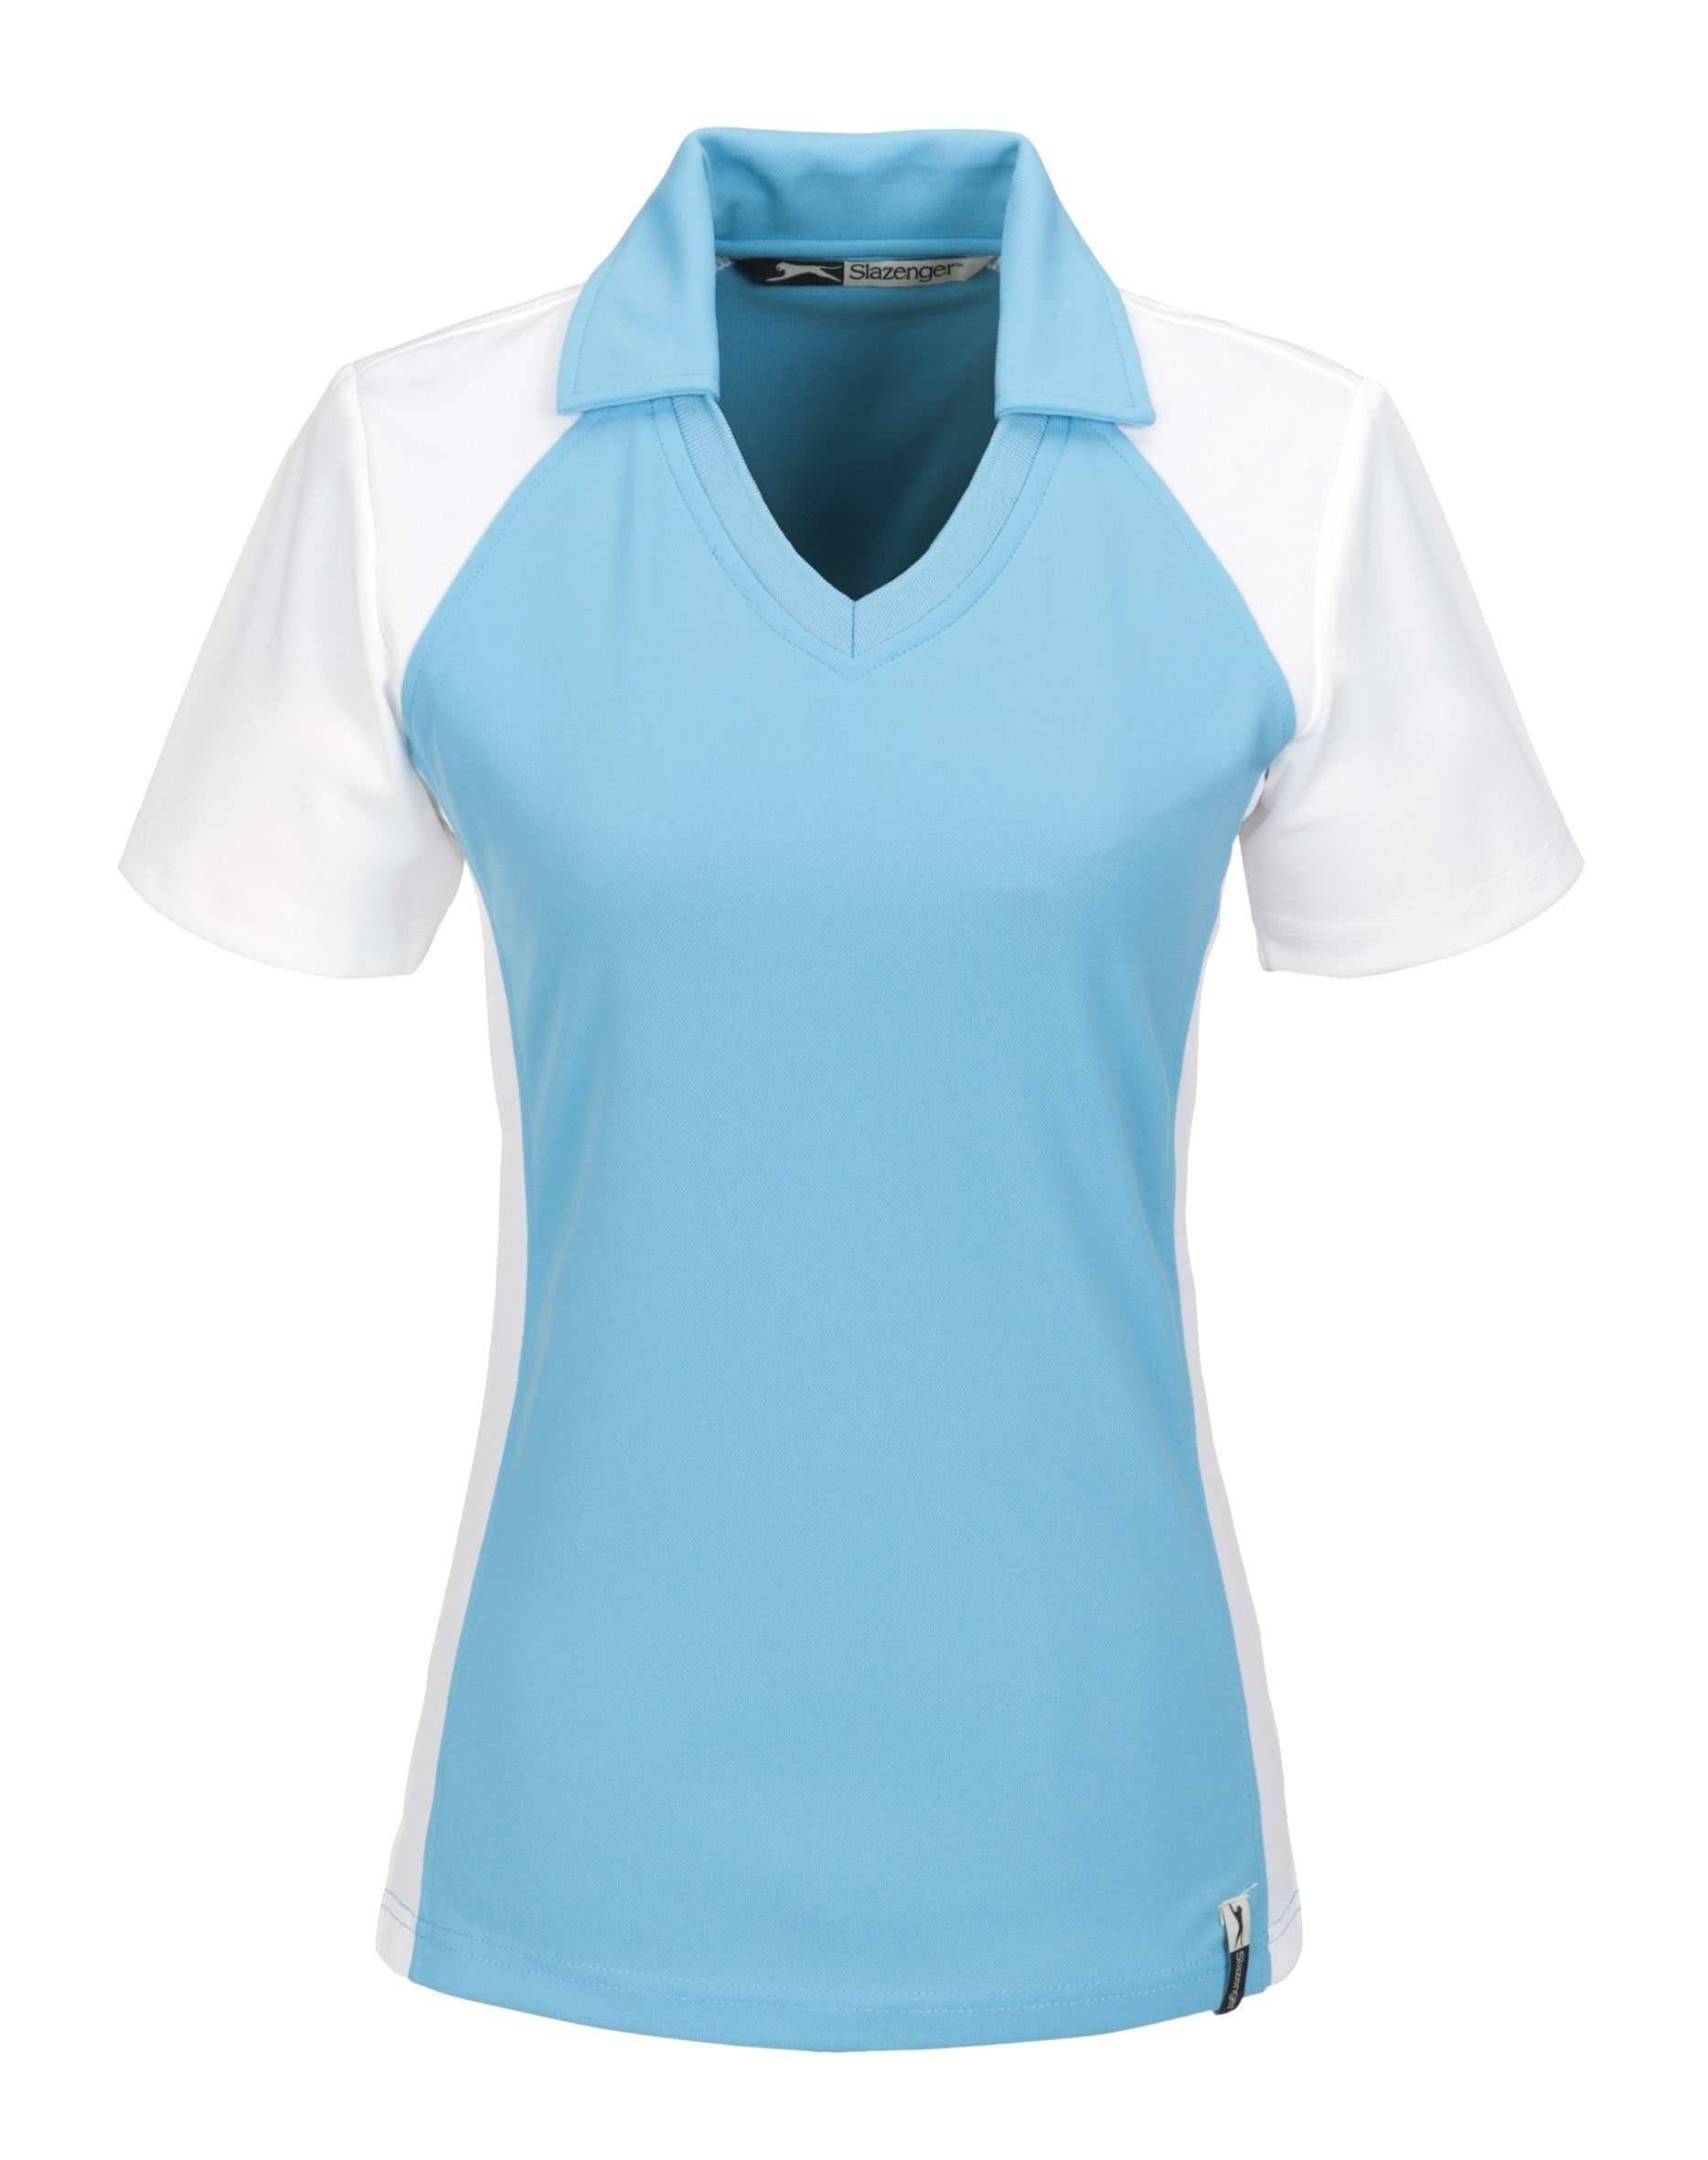 Ladies Grandslam Golf Shirt - Navy Only-2XL-Aqua-AQ